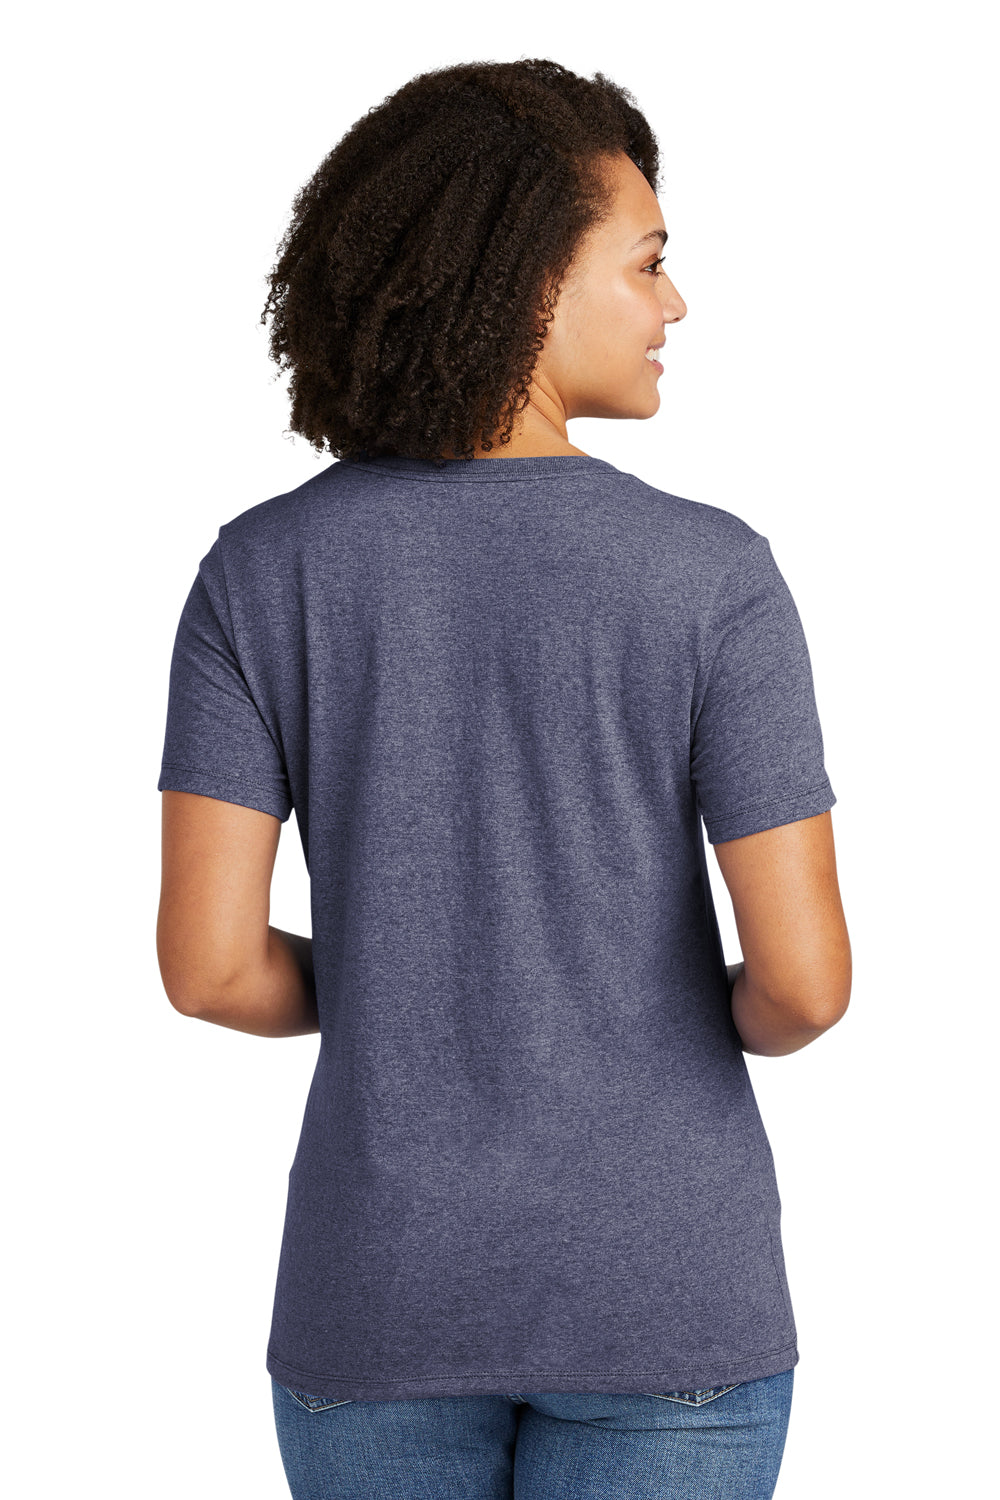 Allmade AL2303 Womens Recycled Short Sleeve V-Neck T-Shirt Heather Navy Blue Model Back